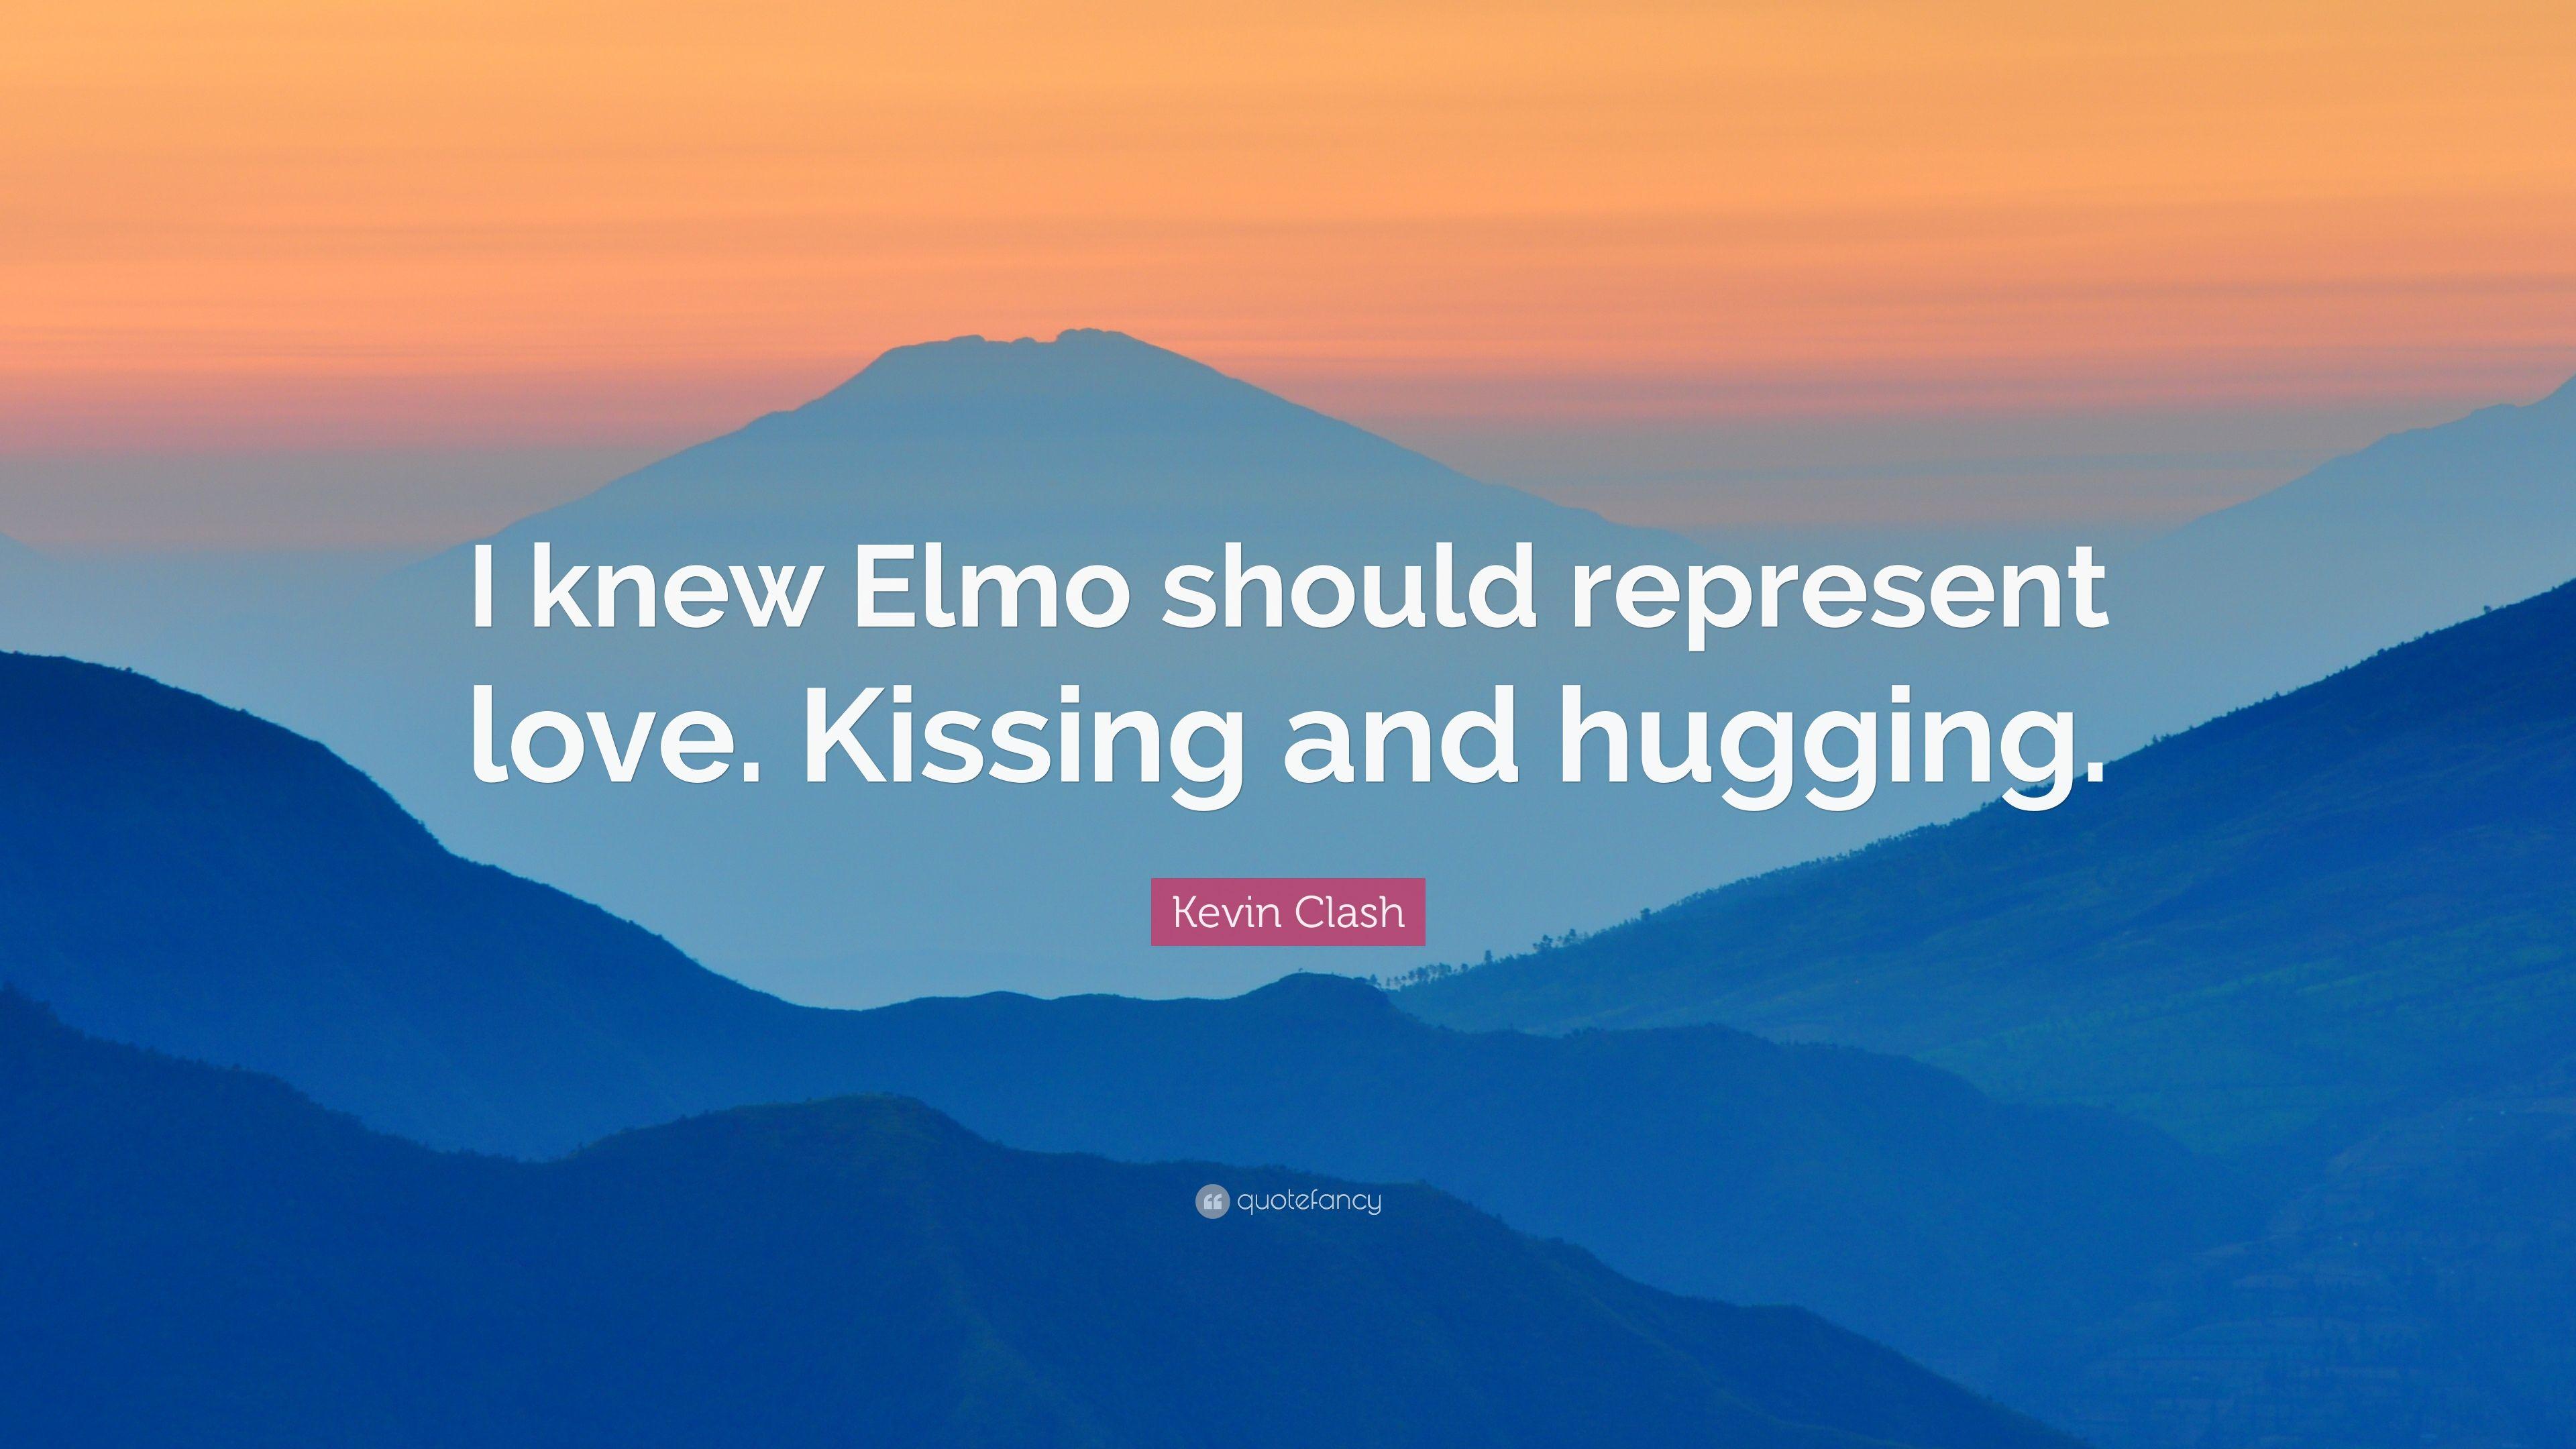 Kevin Clash Quote: “I knew Elmo should represent love. Kissing